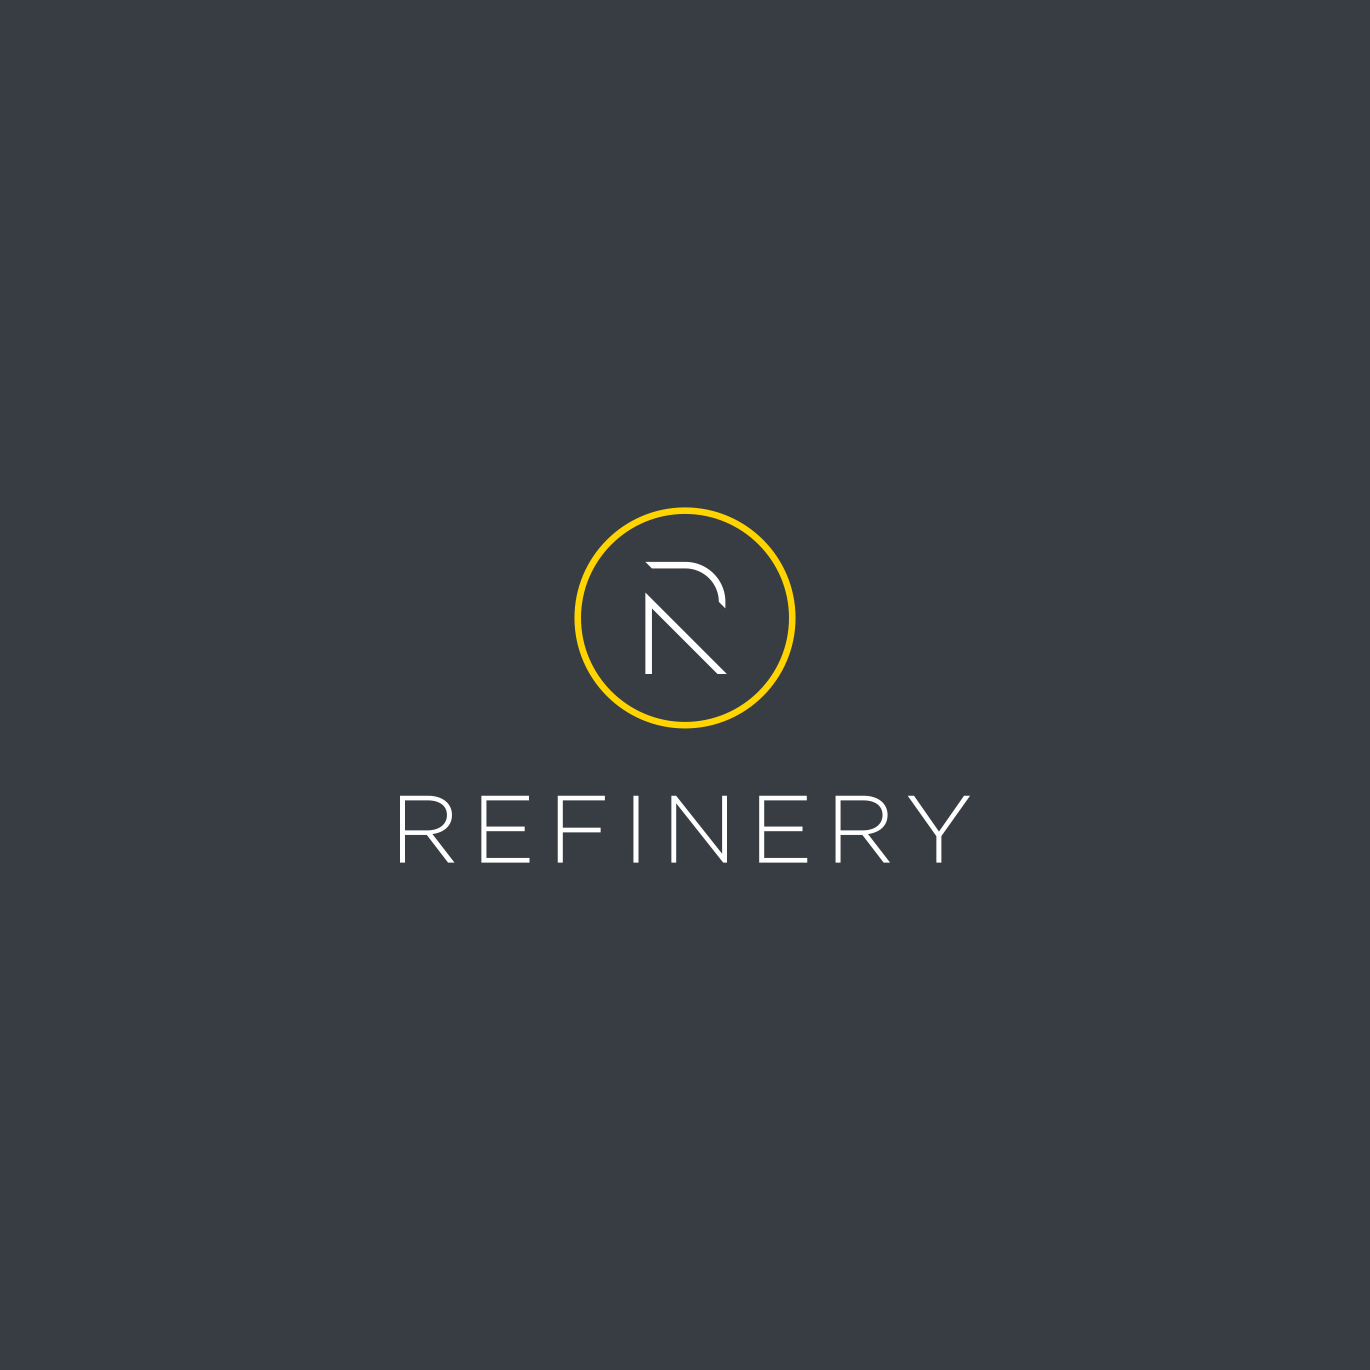 Refinery Logo